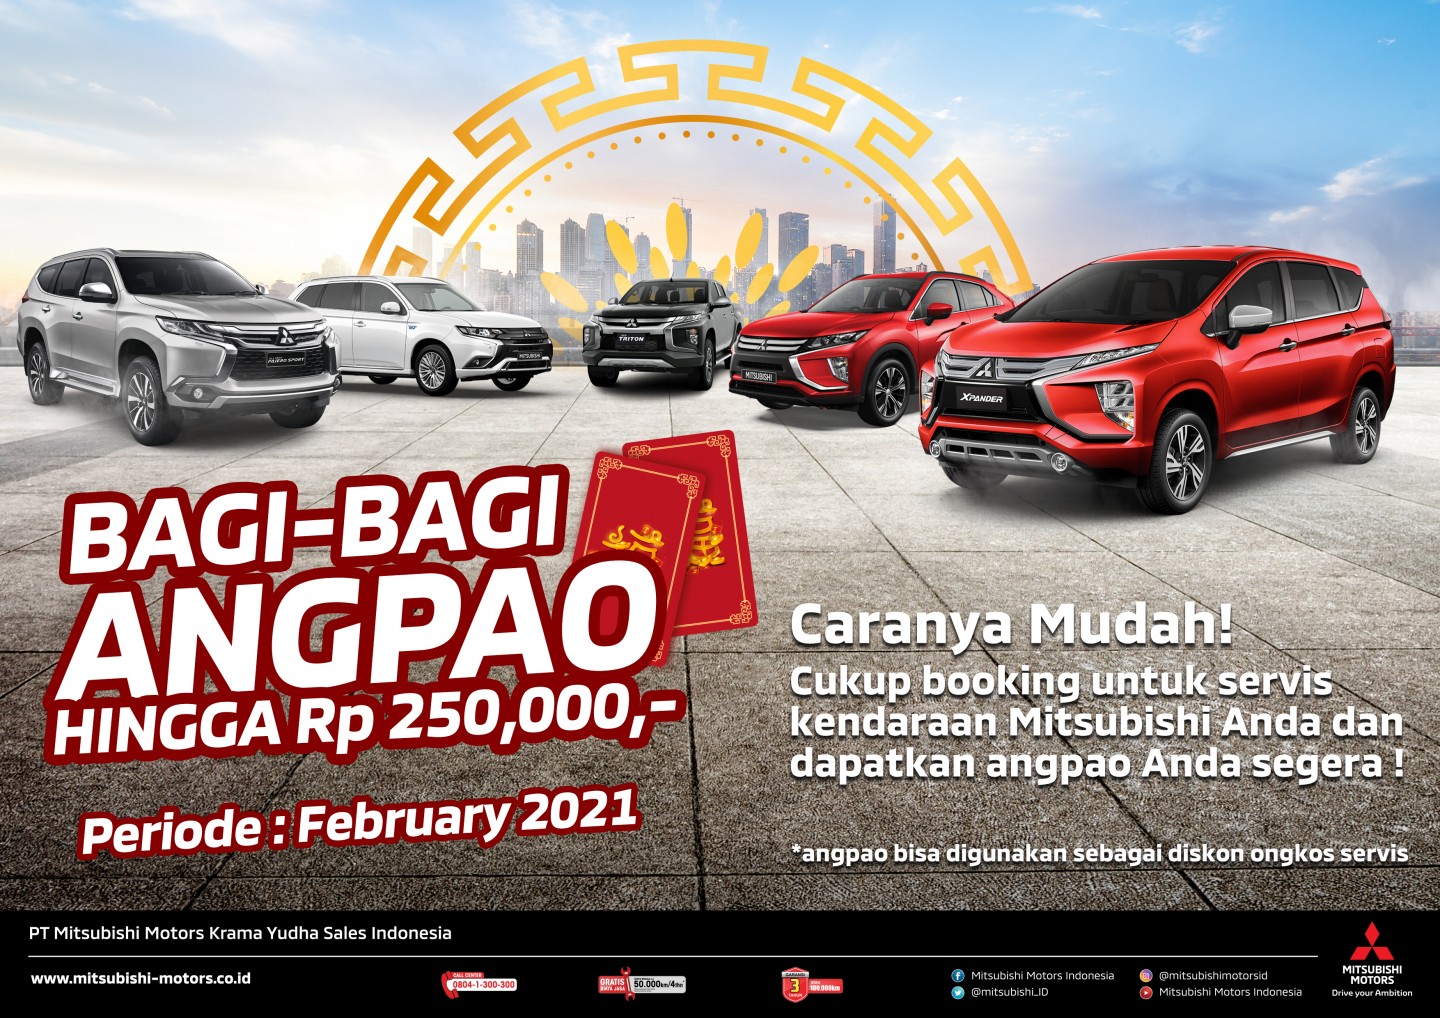 “Mitsubishi Bagi – Bagi Angpao”, Ramaikan Perayaan Hari Raya Imlek Konsumen Mitsubishi di Indonesia